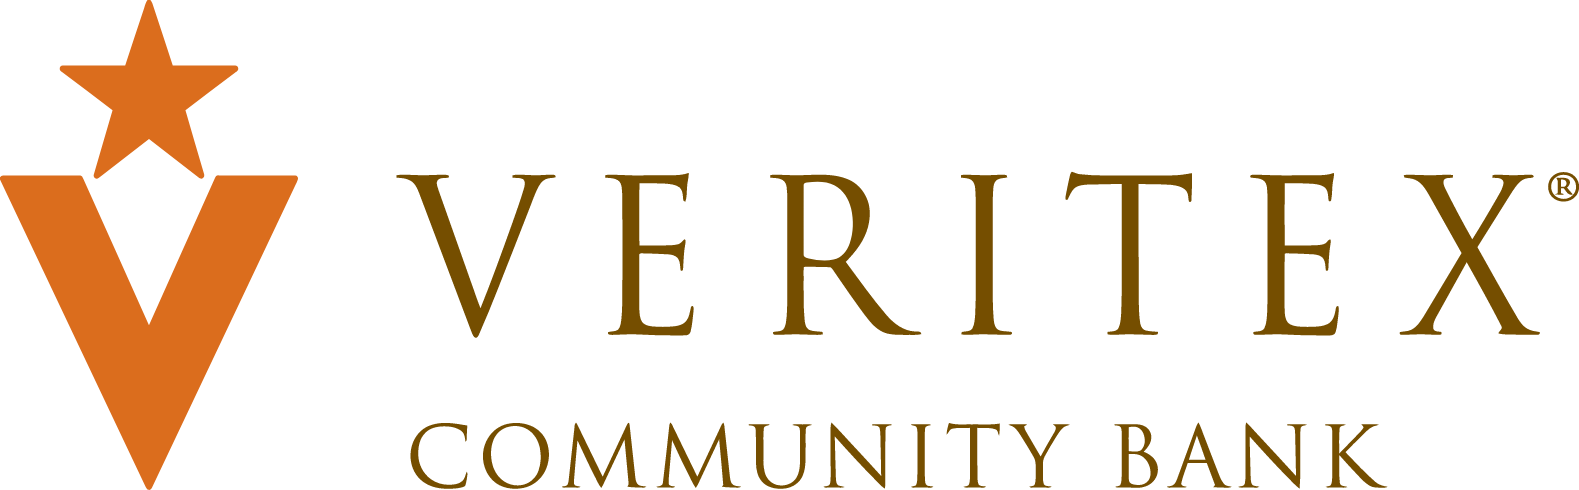 Veritex Holdings
 logo large (transparent PNG)